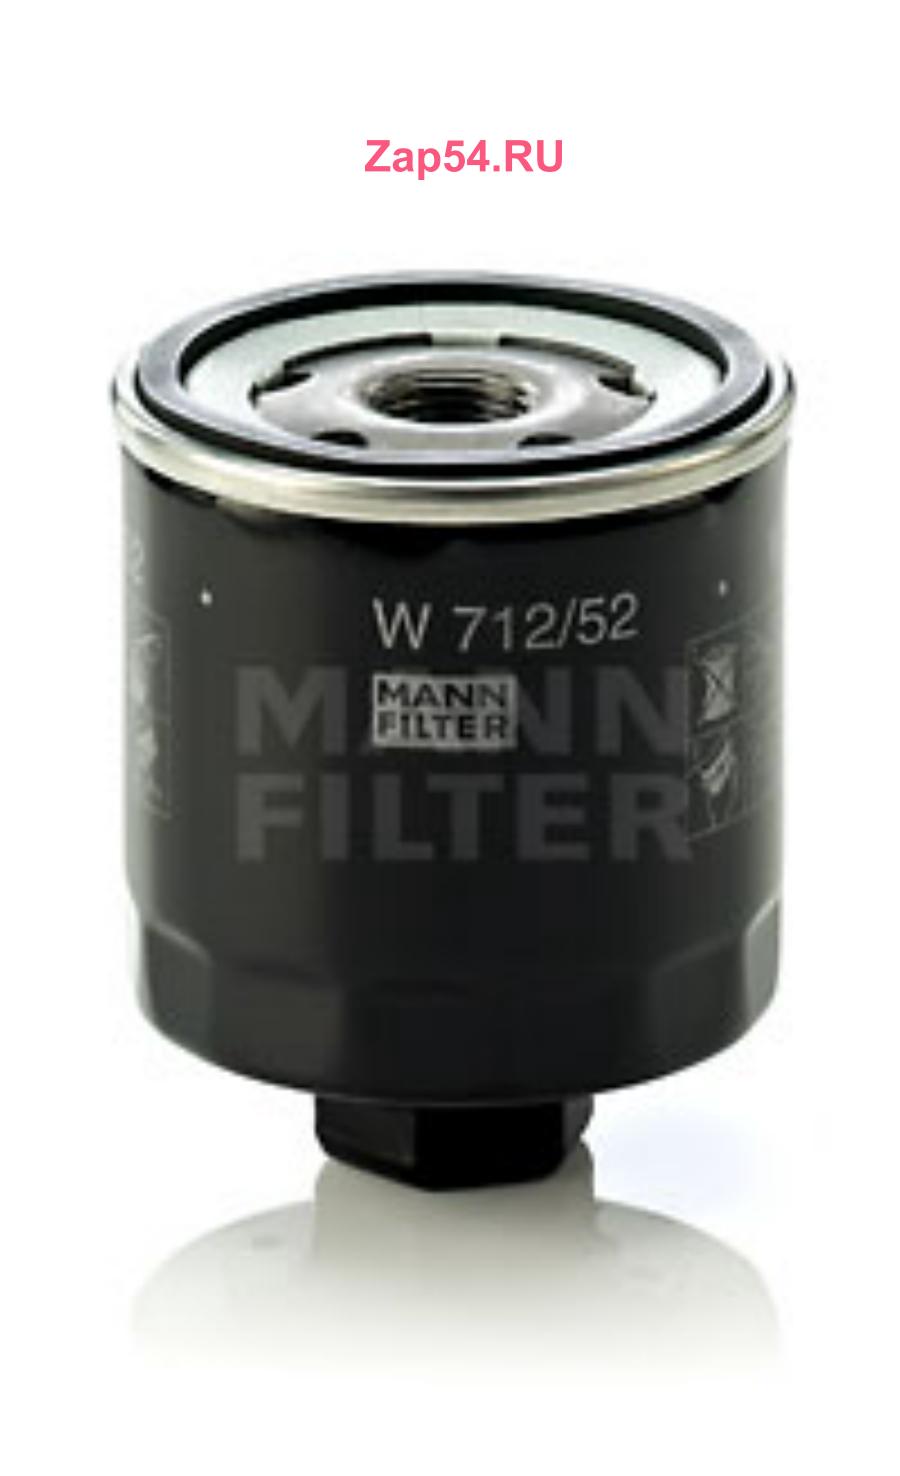 W71252 MANN-FILTER Фильтр масляный MANN-FILTER W712/52 (C111) (под ключ на 30мм)